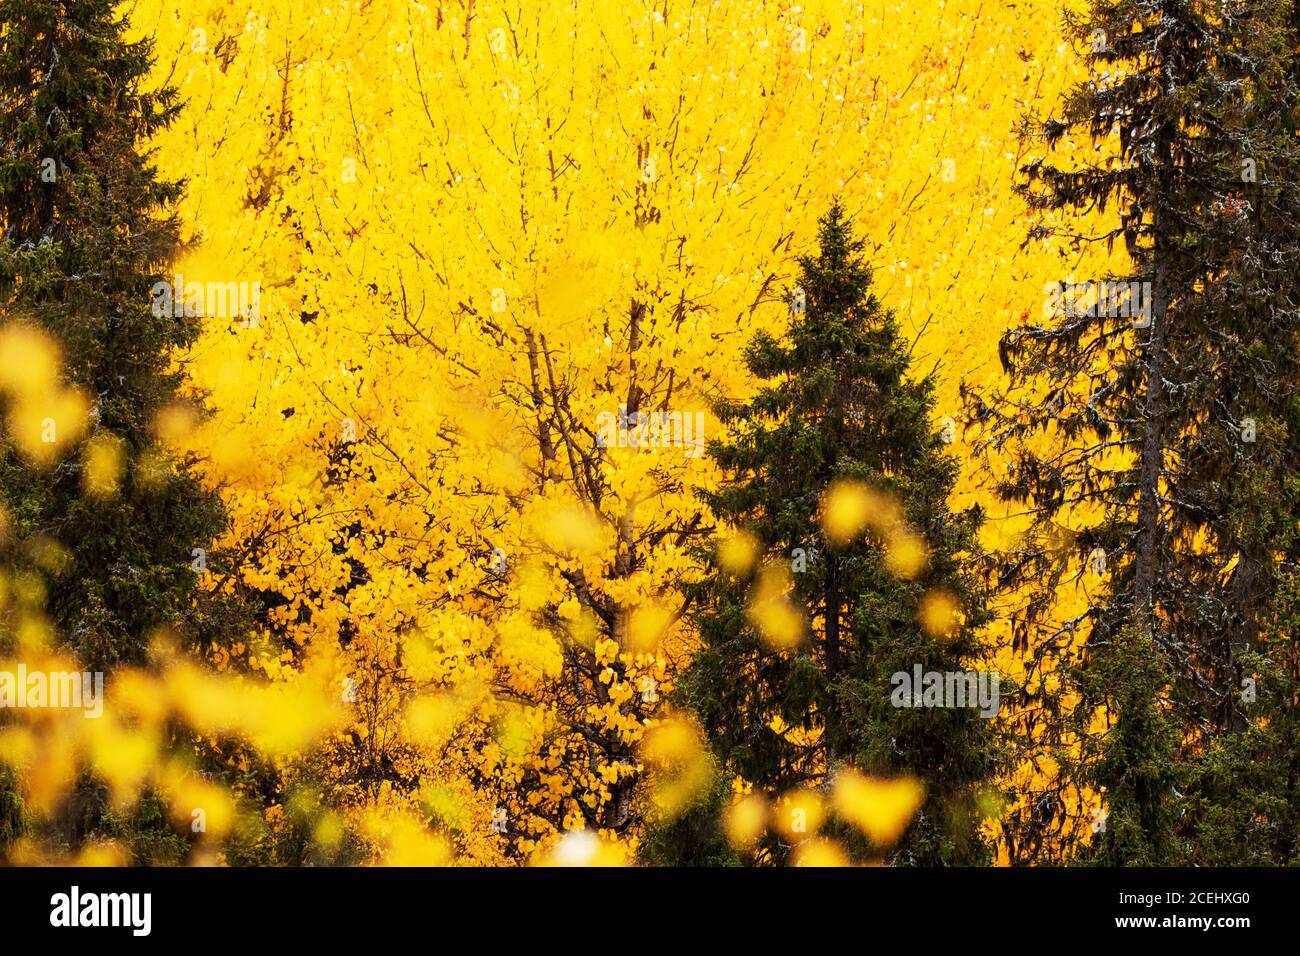 Vibrant bright yellow Aspen and Birch tree leaves during autumn foliage near Kuusamo, Northern Finland Stock Photo